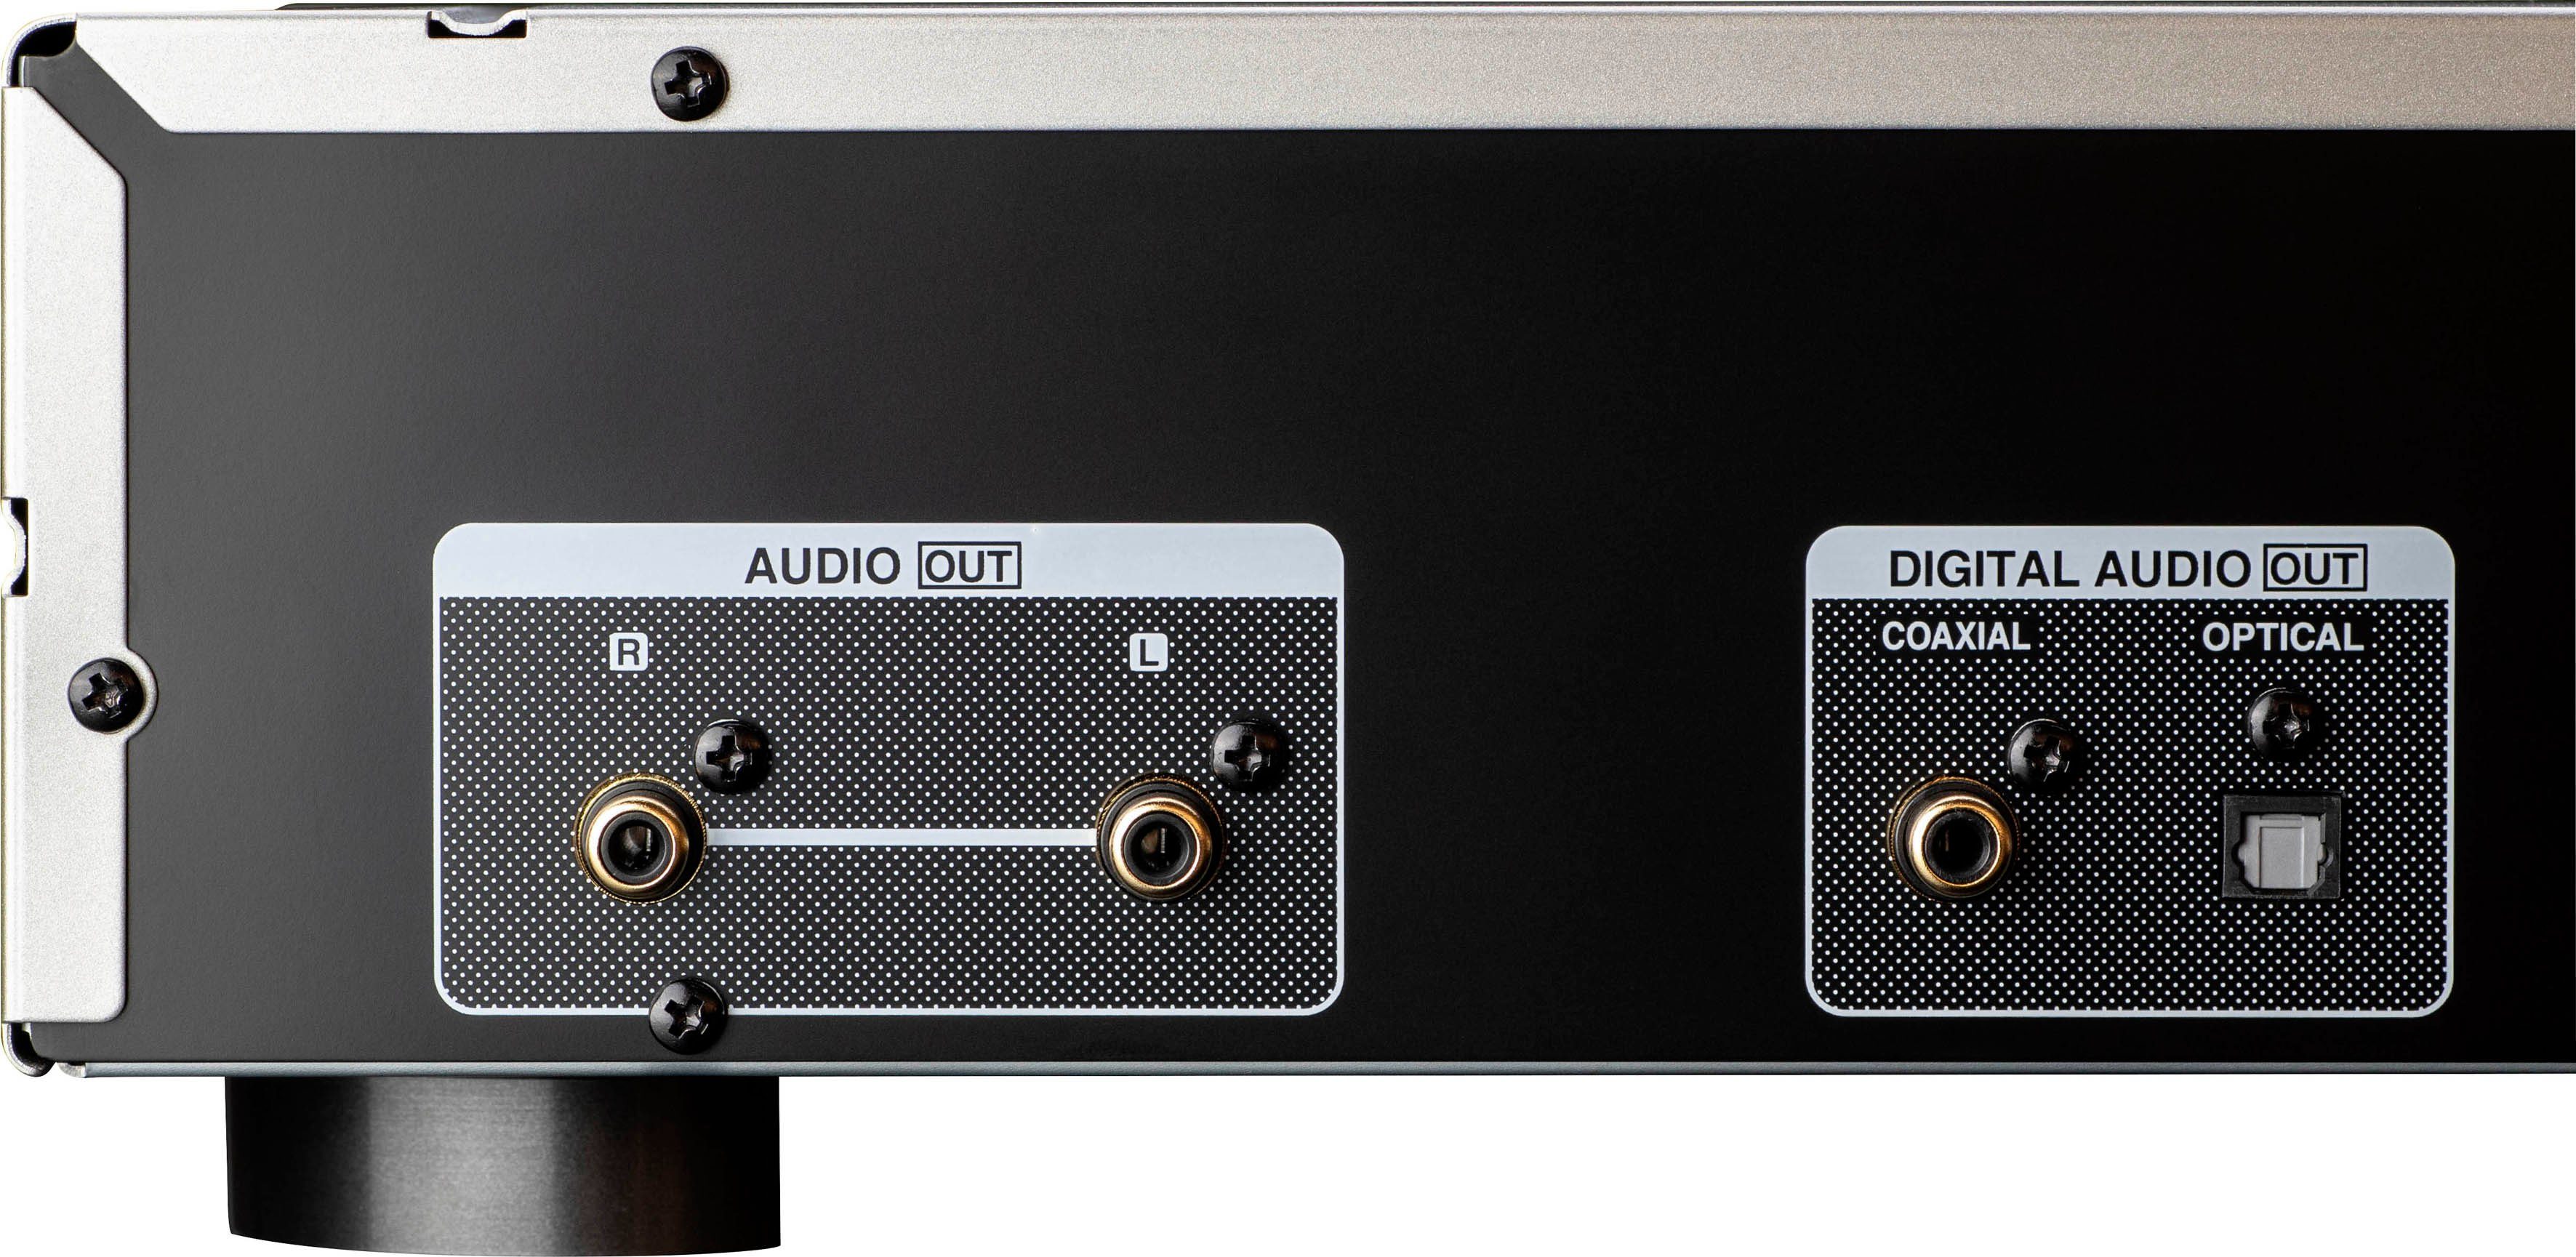 Denon DCD-900NE (USB-Audiowiedergabe) CD-Player silber